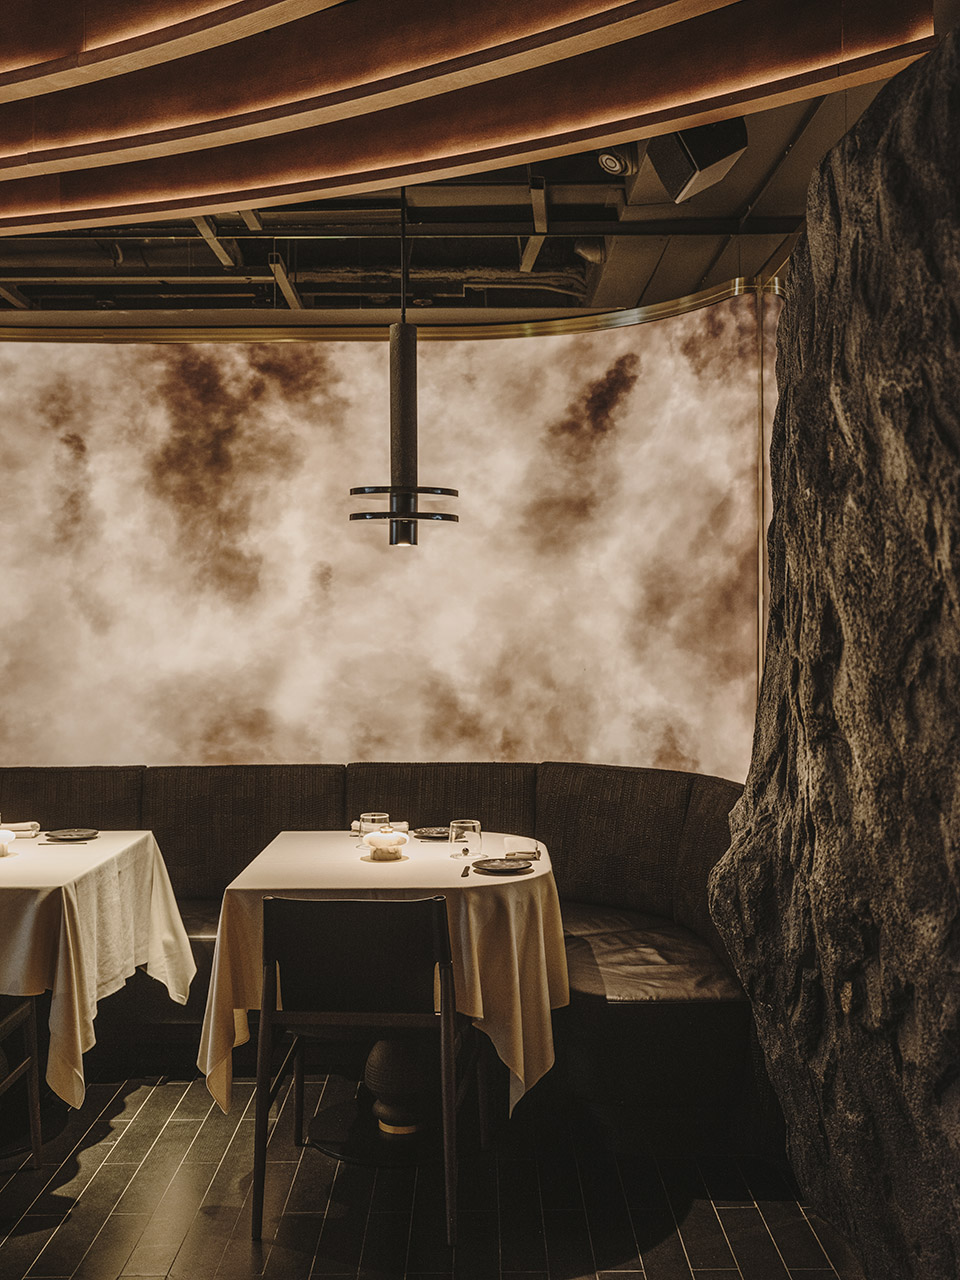 Leña餐厅，西班牙/木头、石头和炭火，提取最原始的烹饪精髓-74